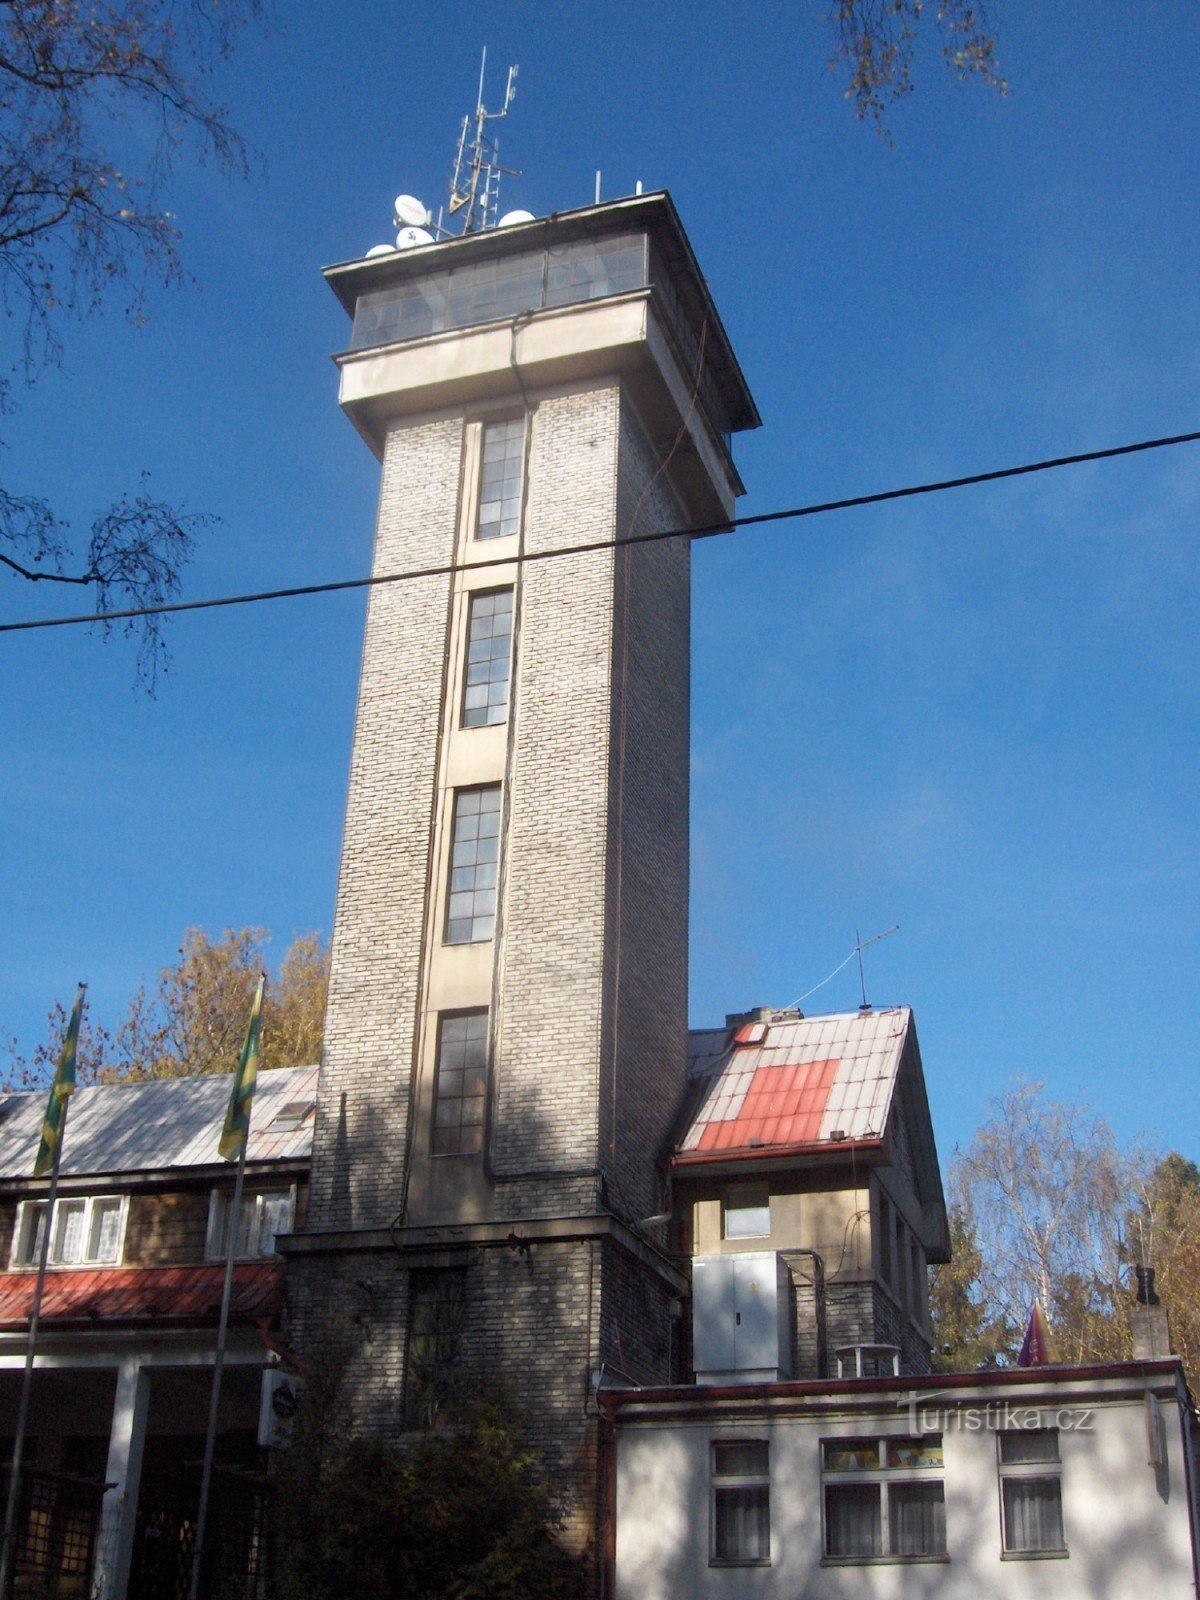 Tour d'observation Kožova hora